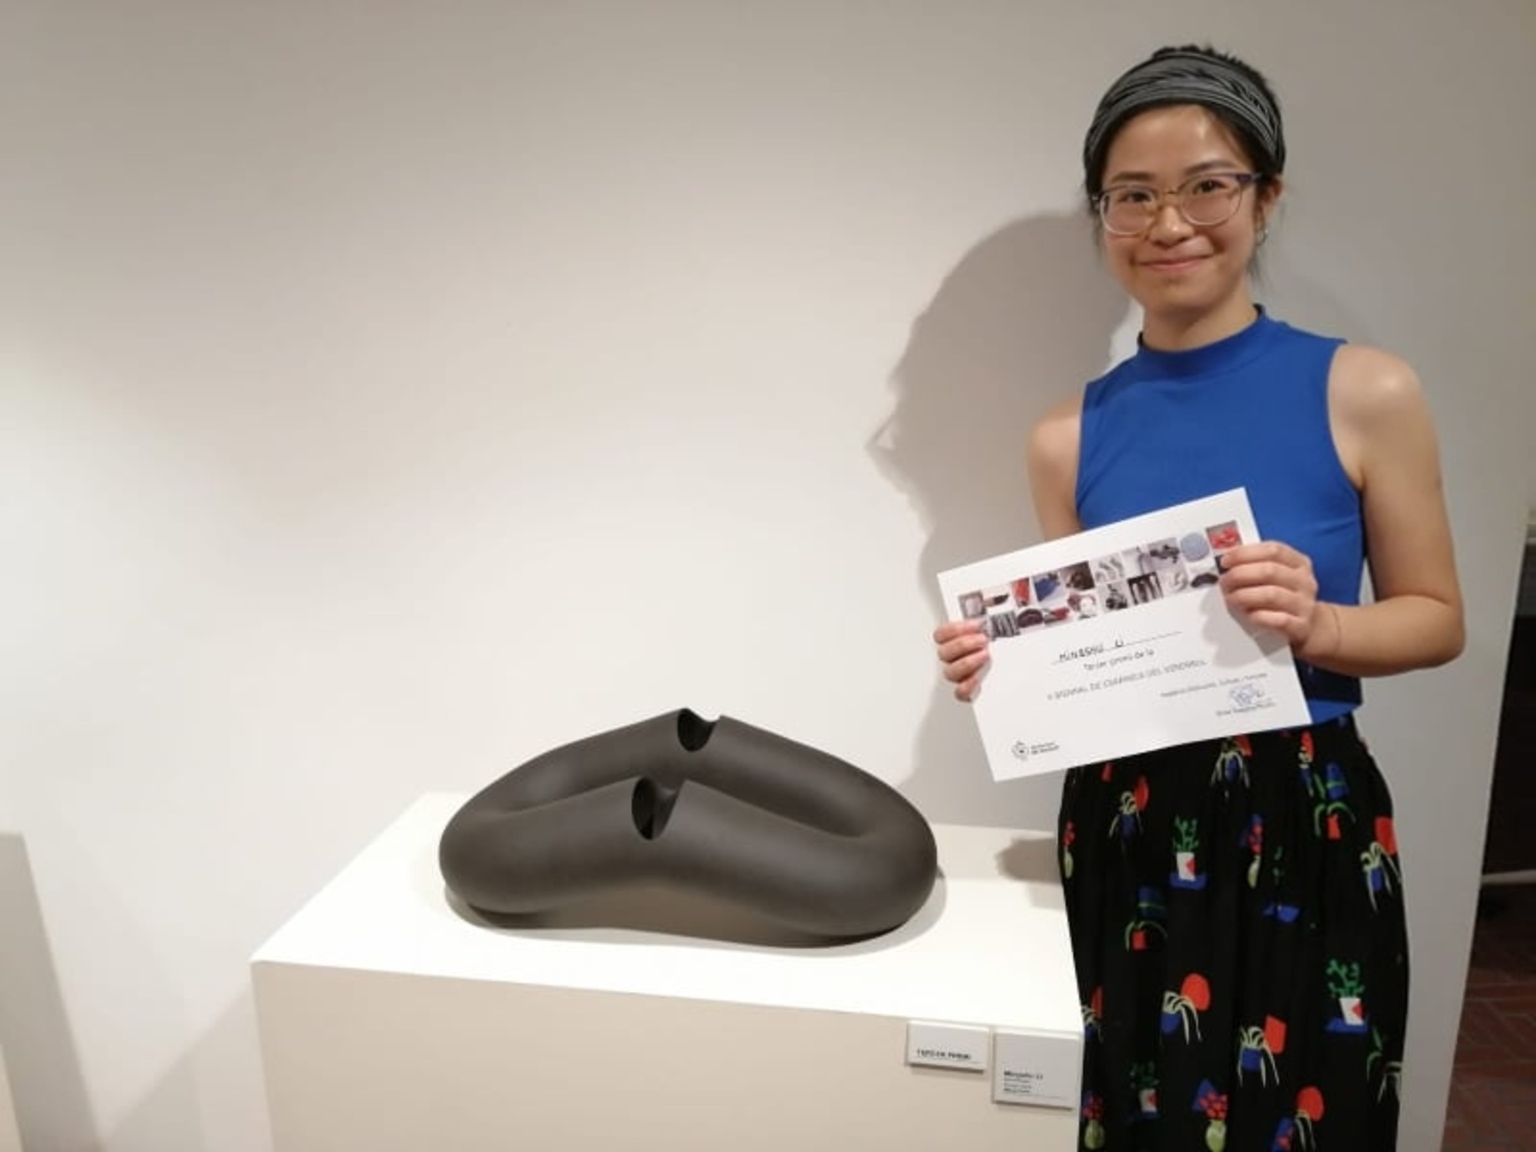 Li Mingshu wins third prize with her work "Black Form" at X Biennal Internacional de Ceràmica del Vendrell in Spain.